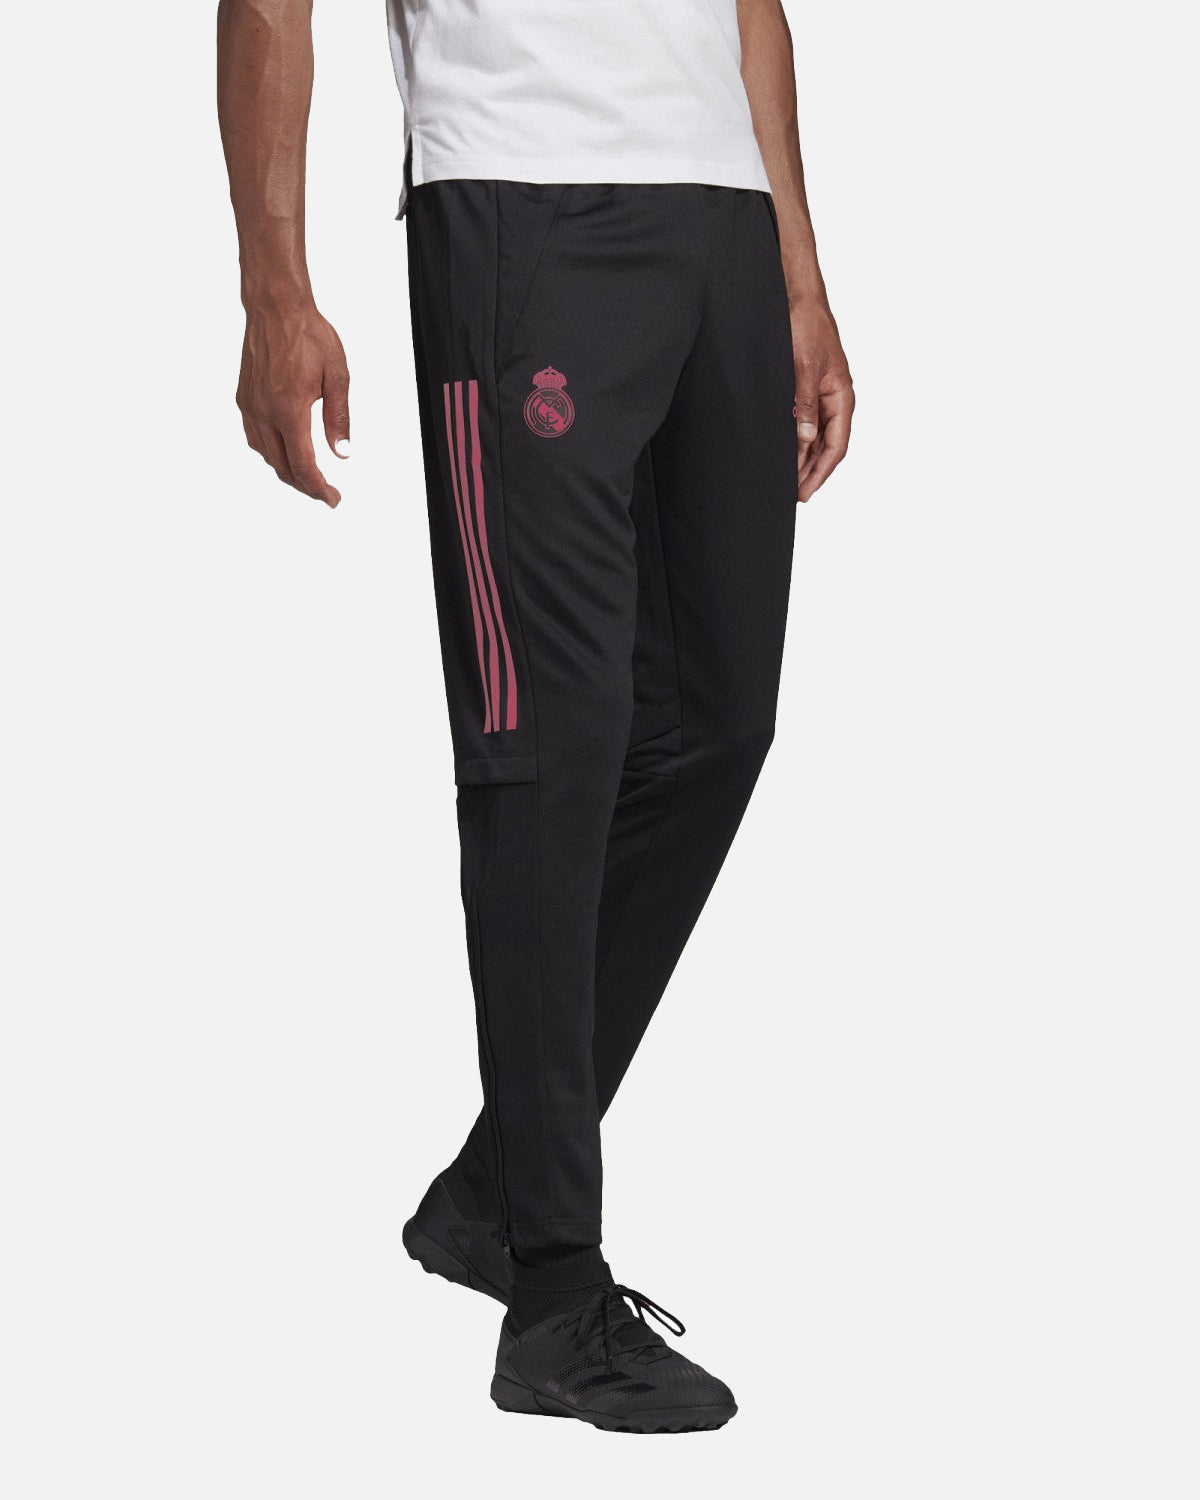 Real Madrid Training Pants 2020/2021 - Black/Pink